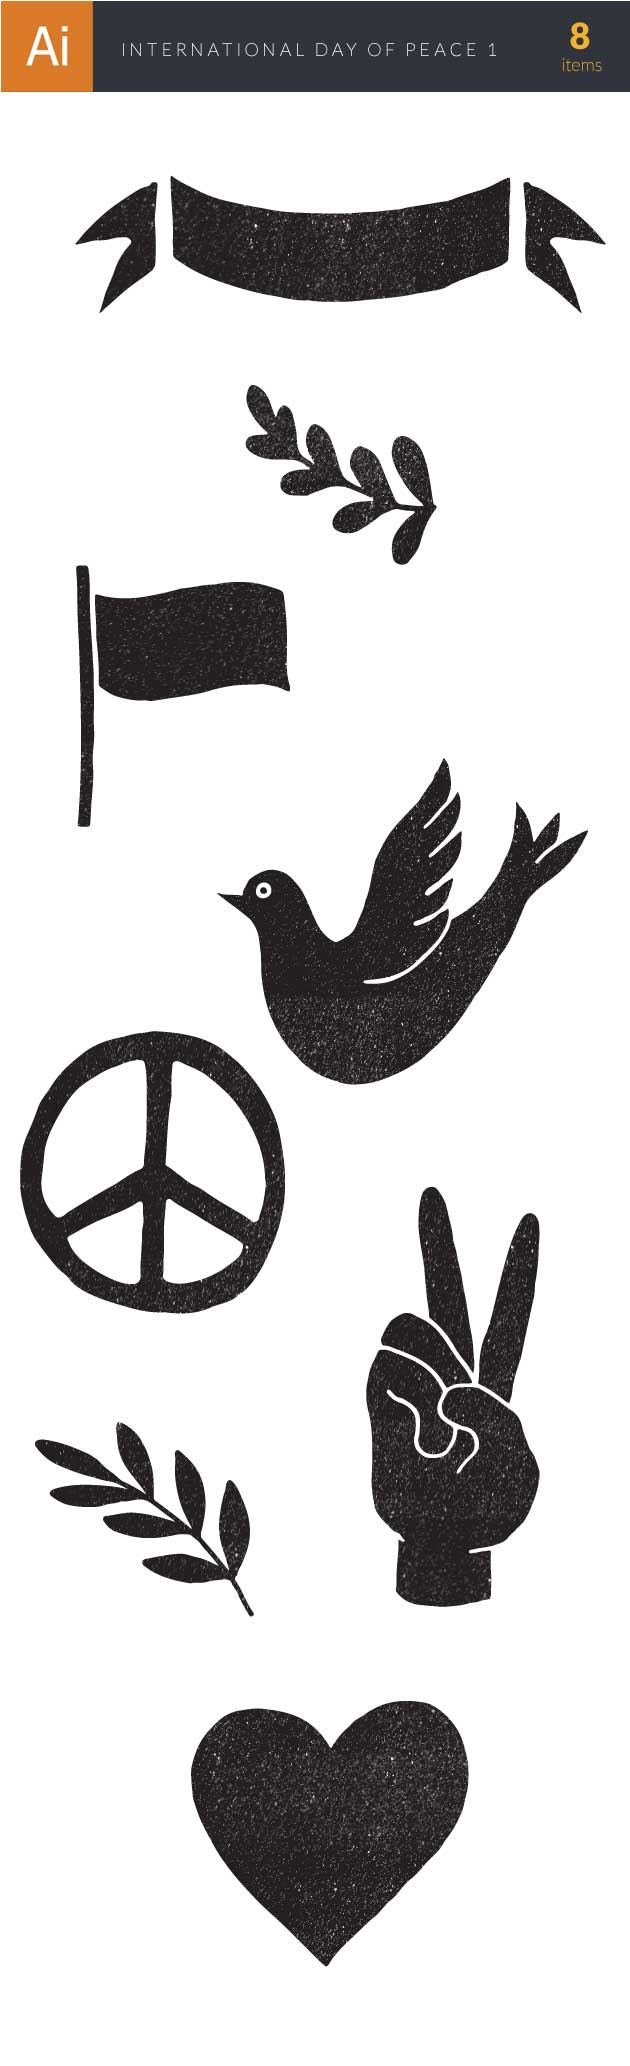 International Day of Peace Elements Set 1 35